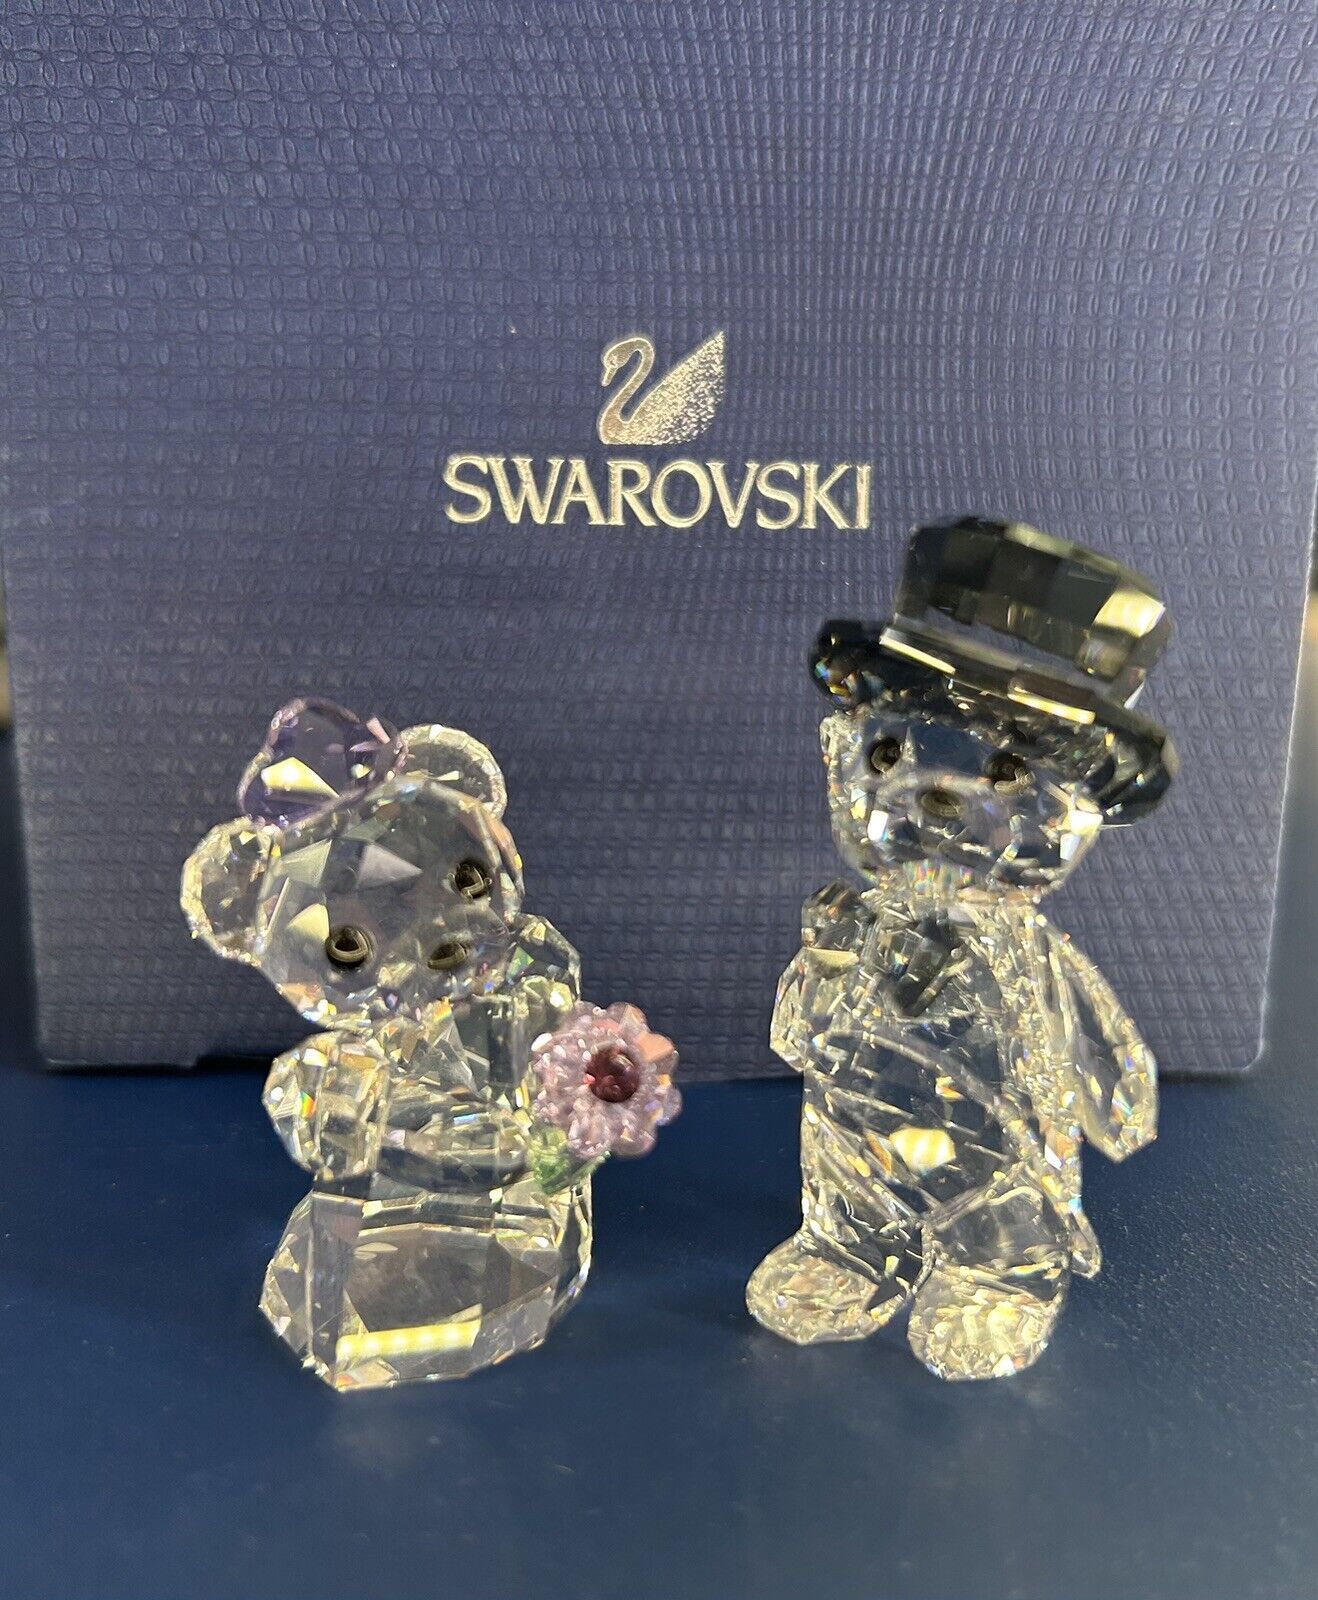 Swarovski Kris Bear You & I, Item # 1096736 NEW in Box (Set Of 2 Figurines).